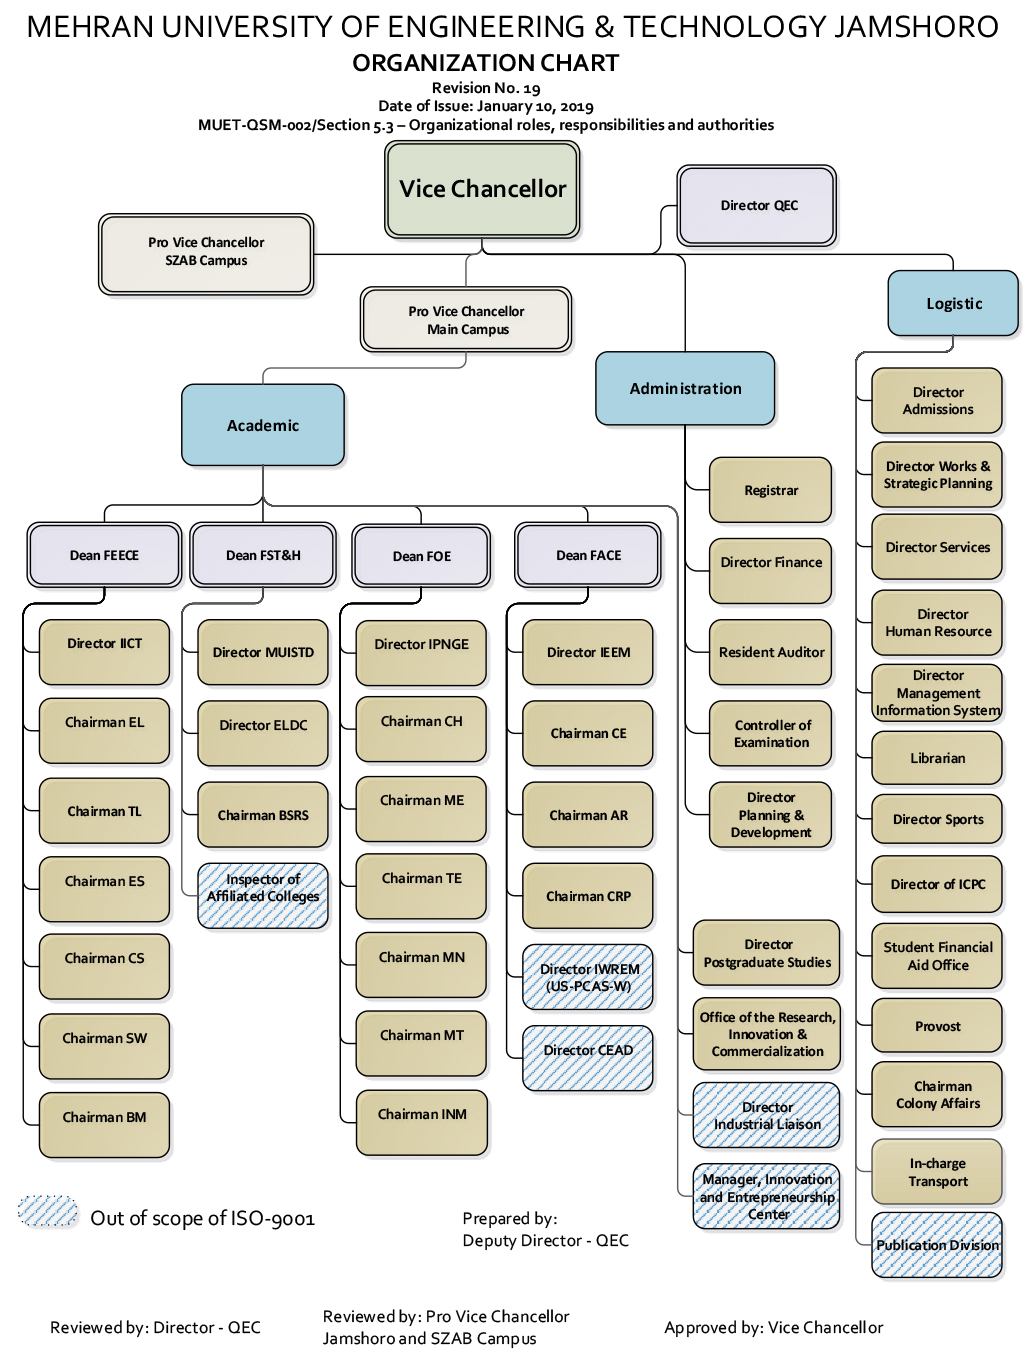 Organization Chart | Mehran University